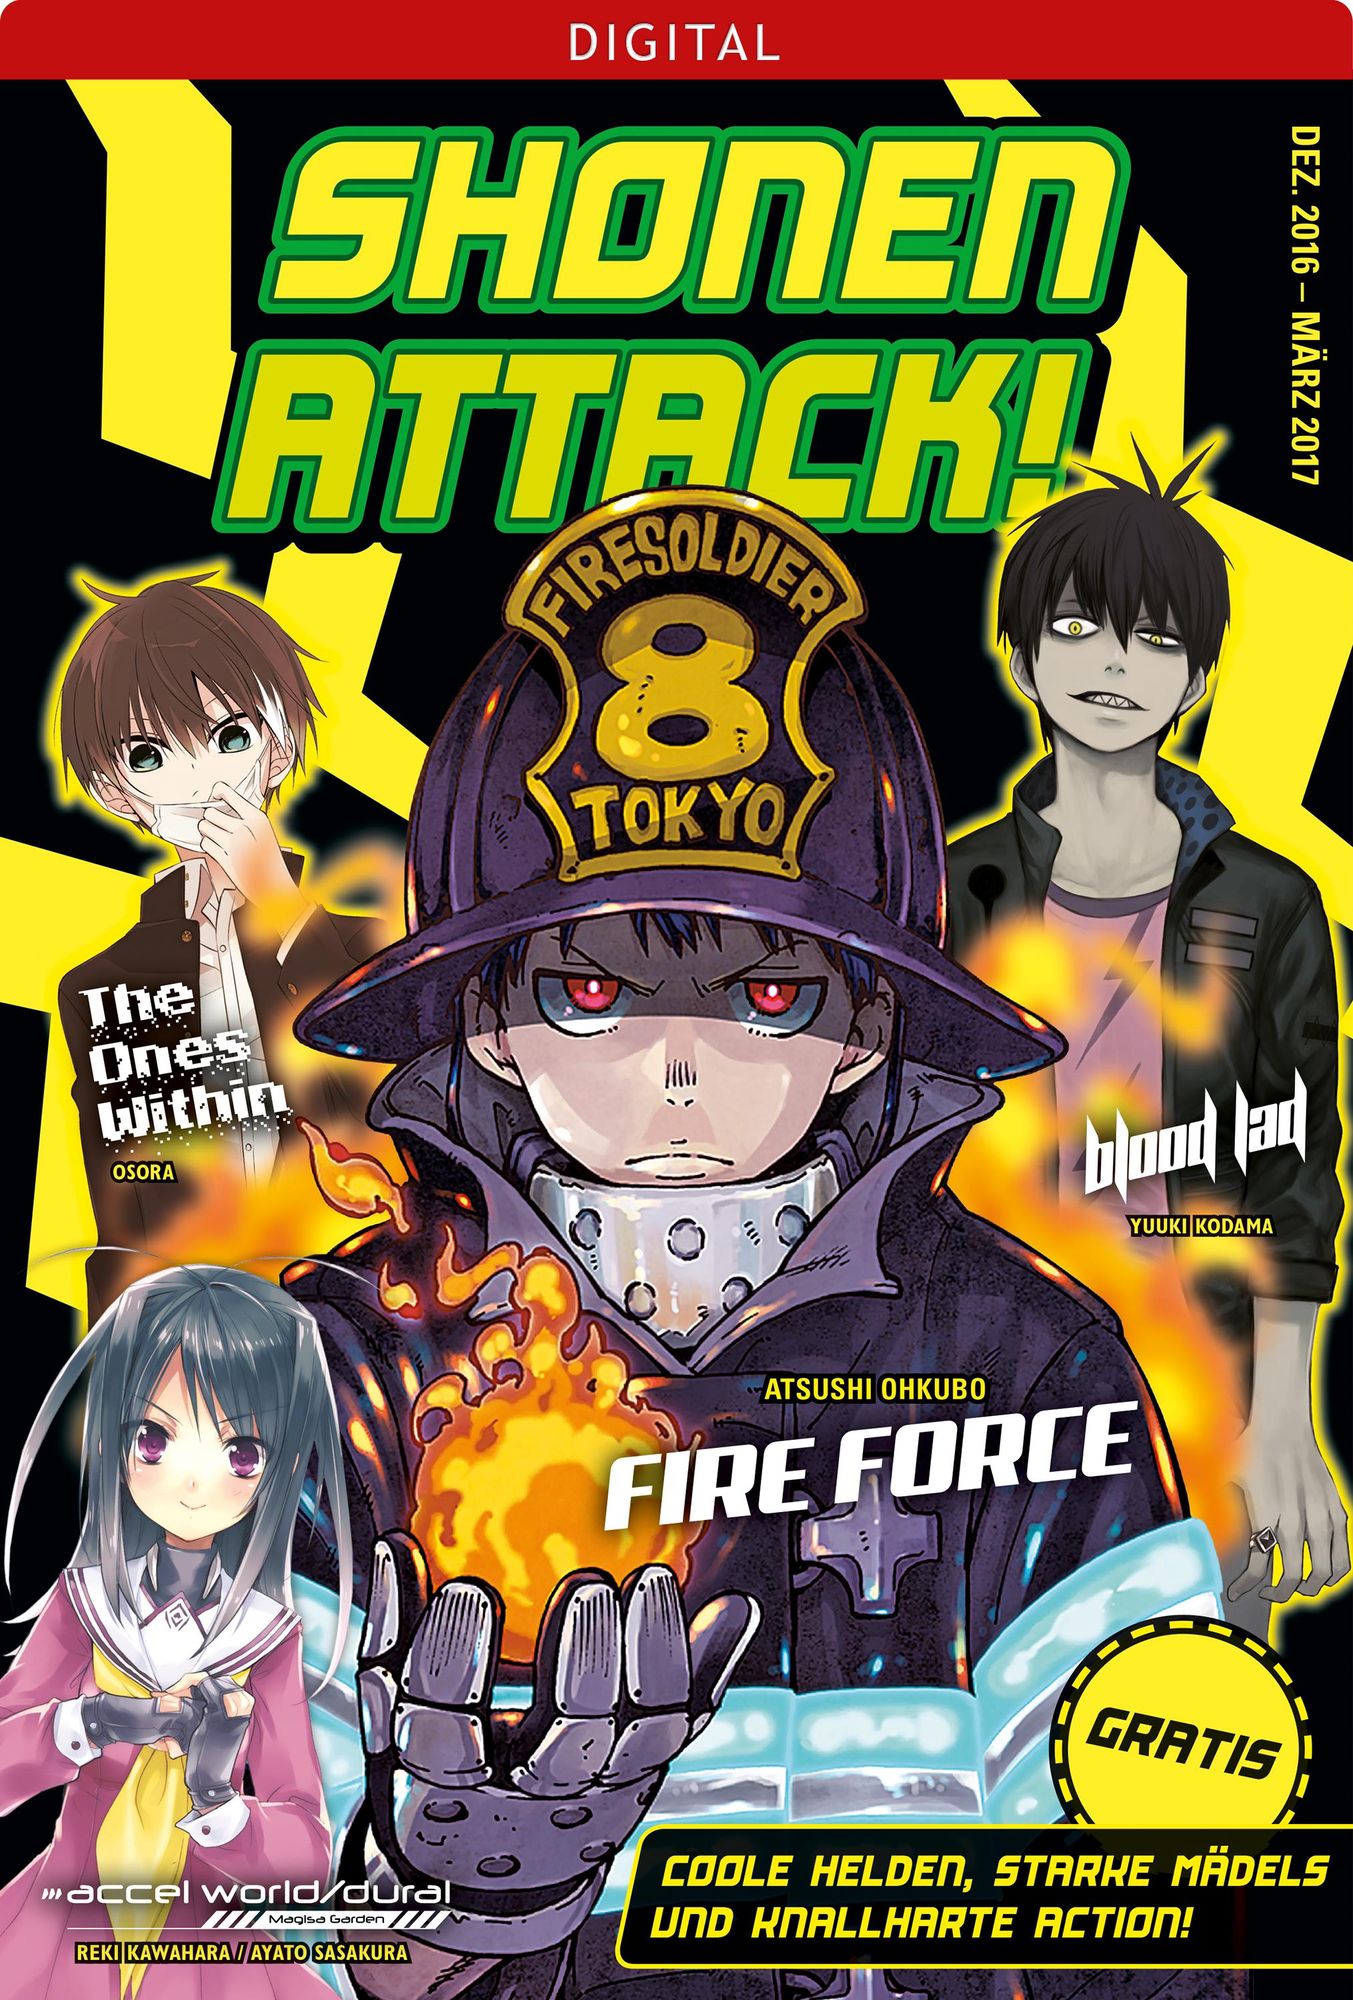 Fire Force 16 Manga eBook by Atsushi Ohkubo - EPUB Book